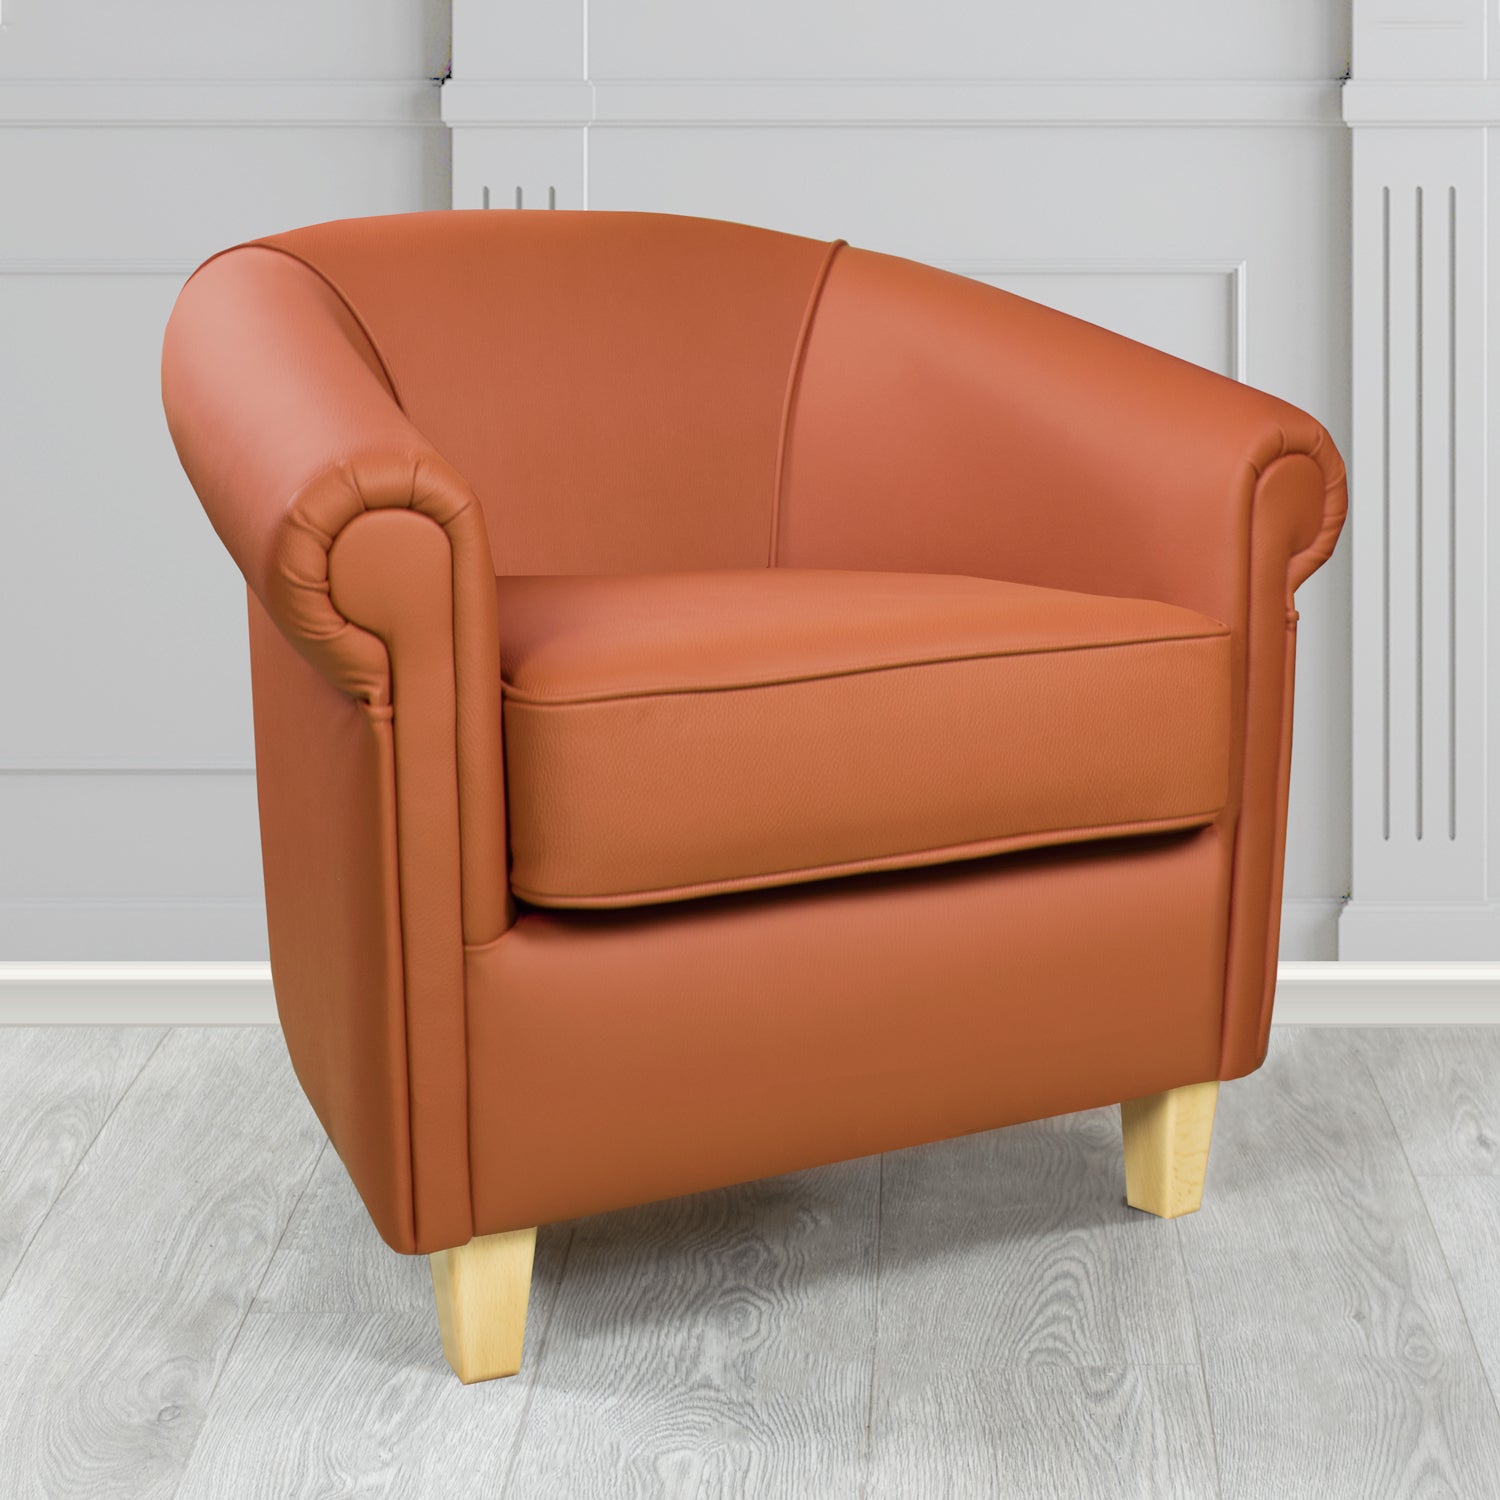 Siena Tub Chair in Crib 5 Shelly Spice Genuine Leather - The Tub Chair Shop